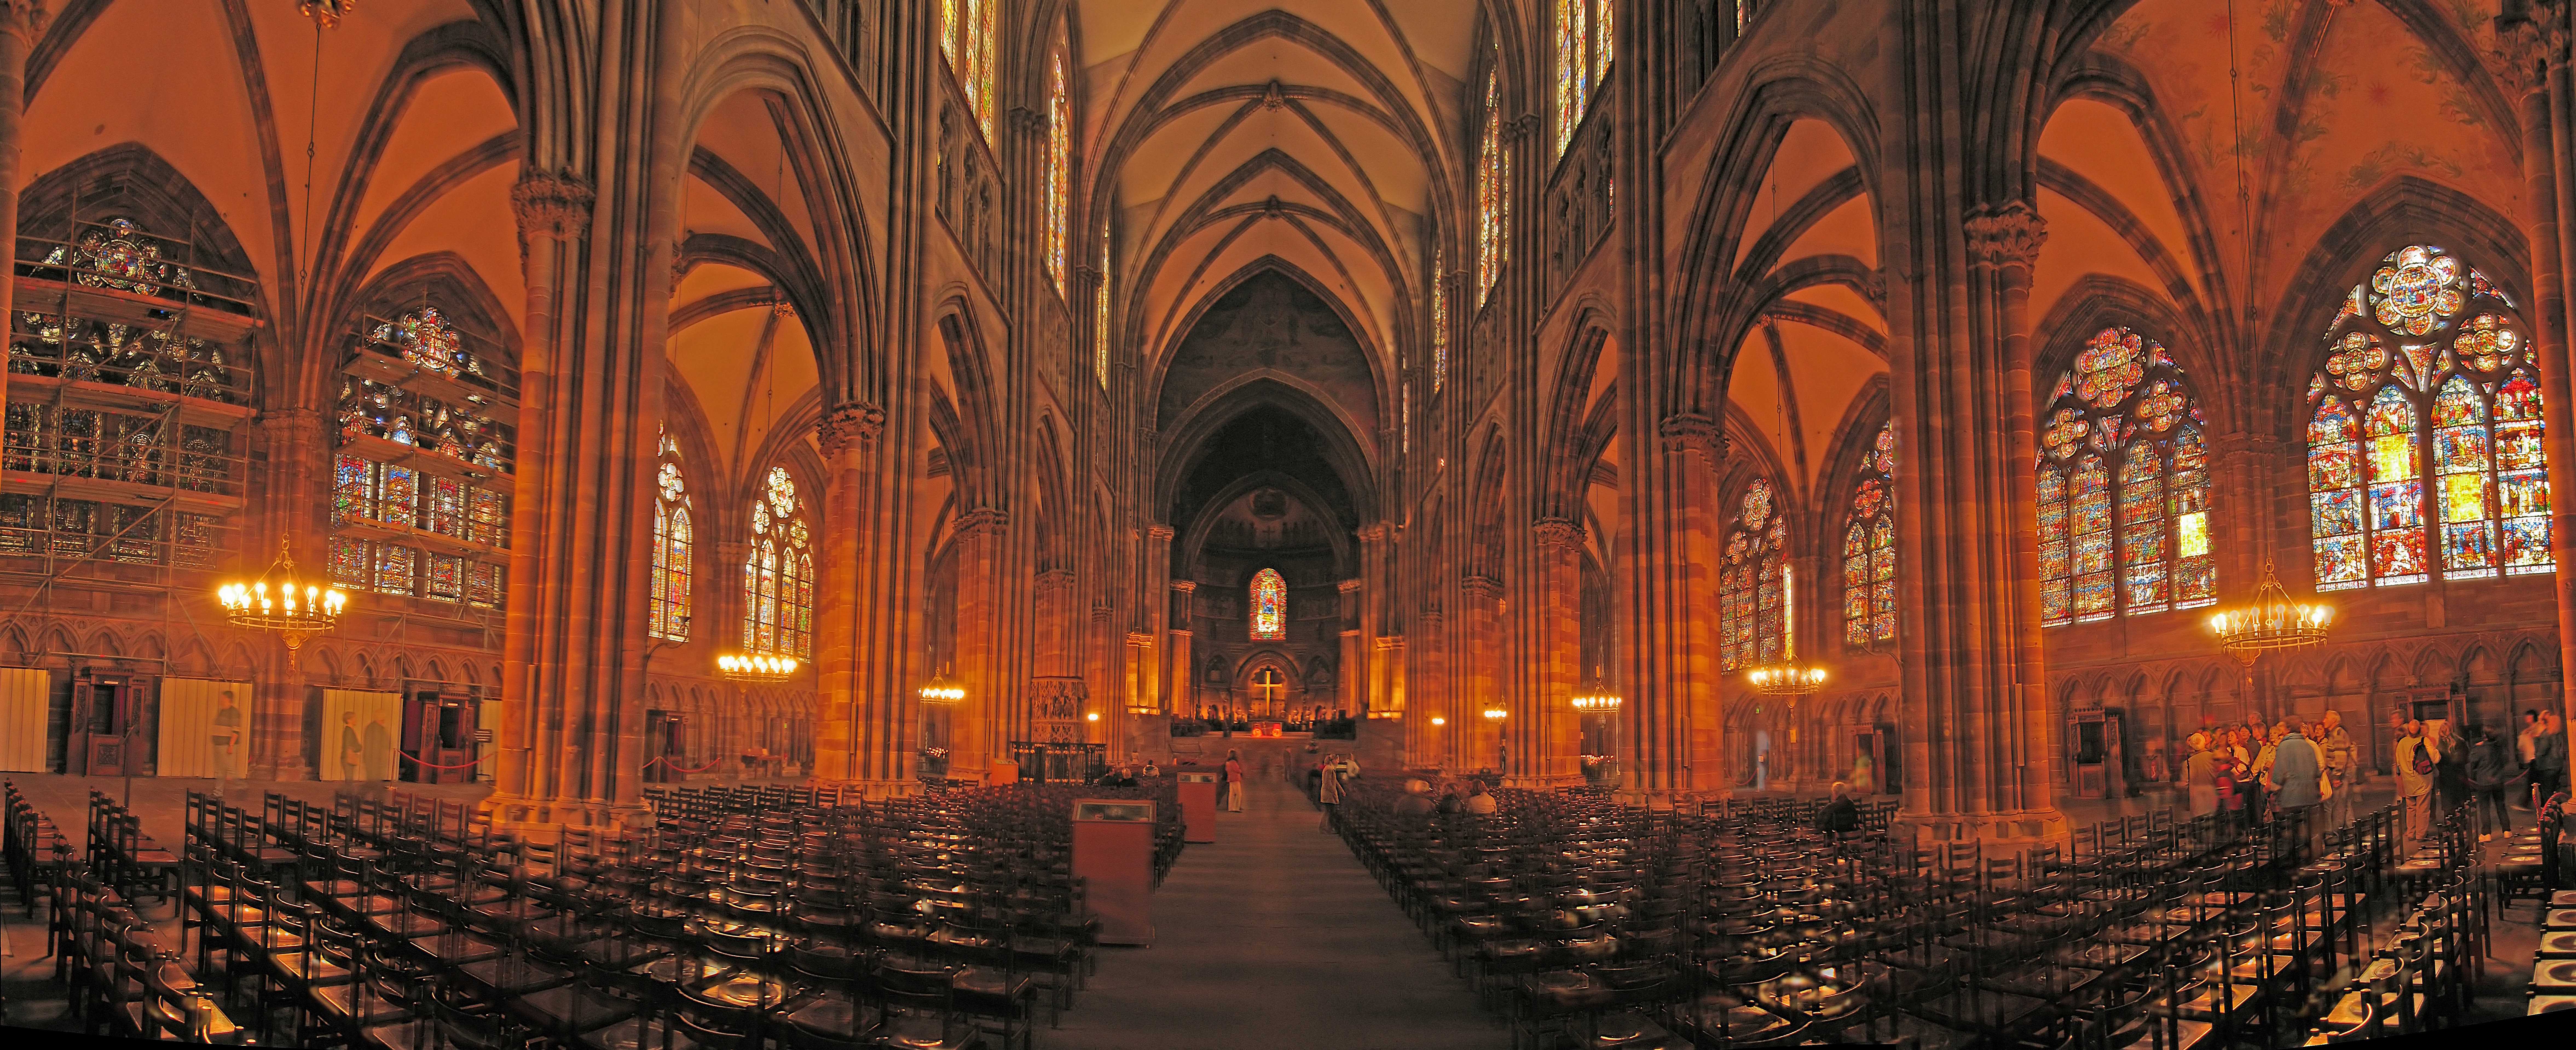 https://commons.wikimedia.org/wiki/File:Cath%C3%A9drale_Notre-Dame_de_Strasbourg.jpg#/media/File:Cathédrale_Notre-Dame_de_Strasbourg.jpg